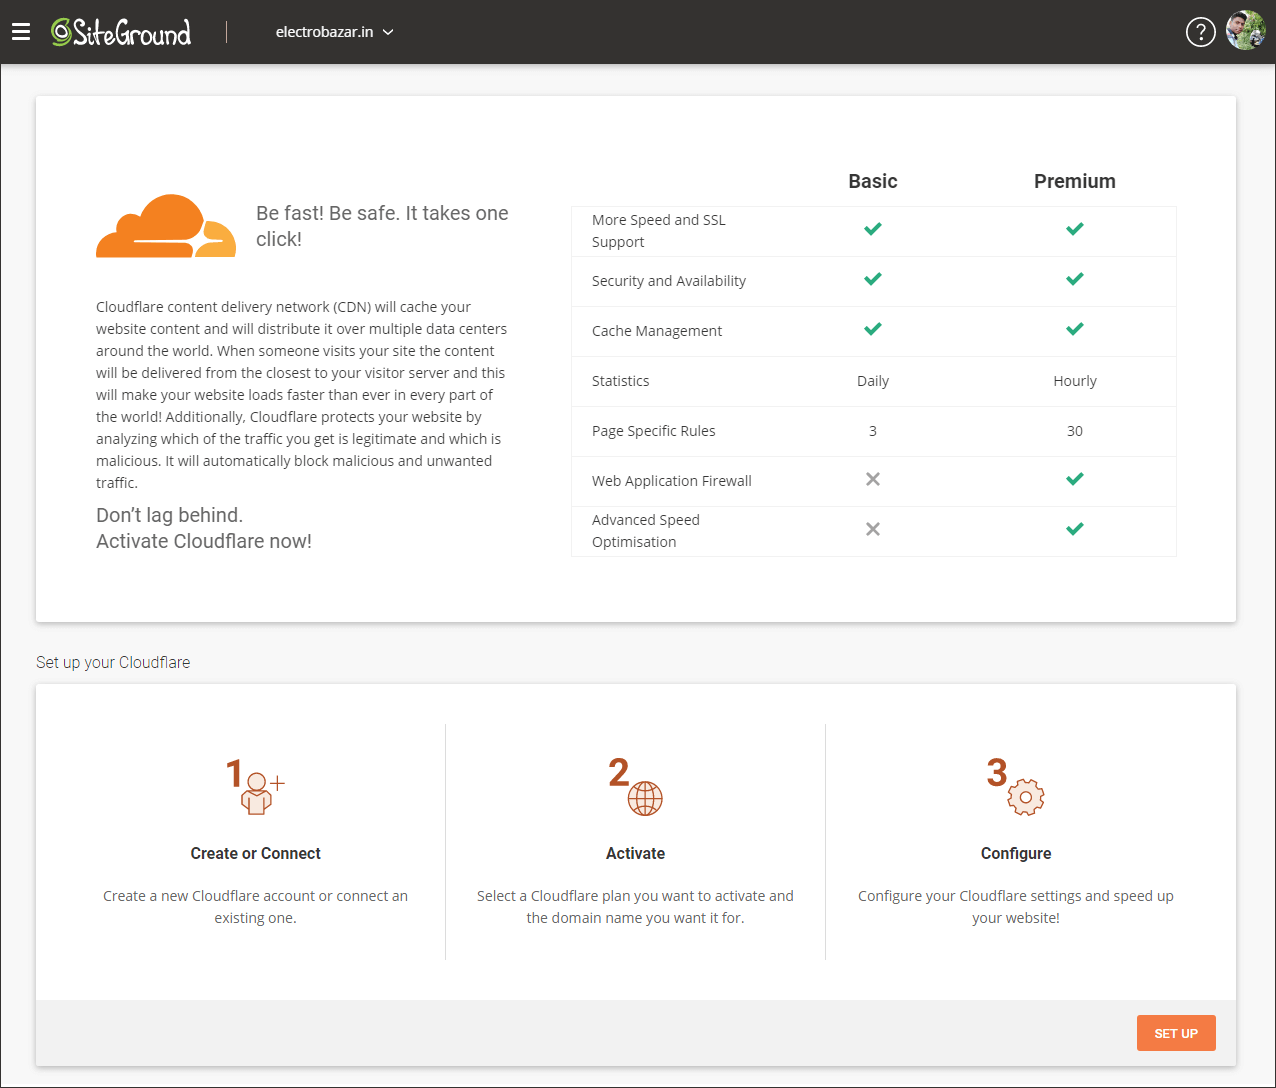 SiteGround CloudFlare CDN